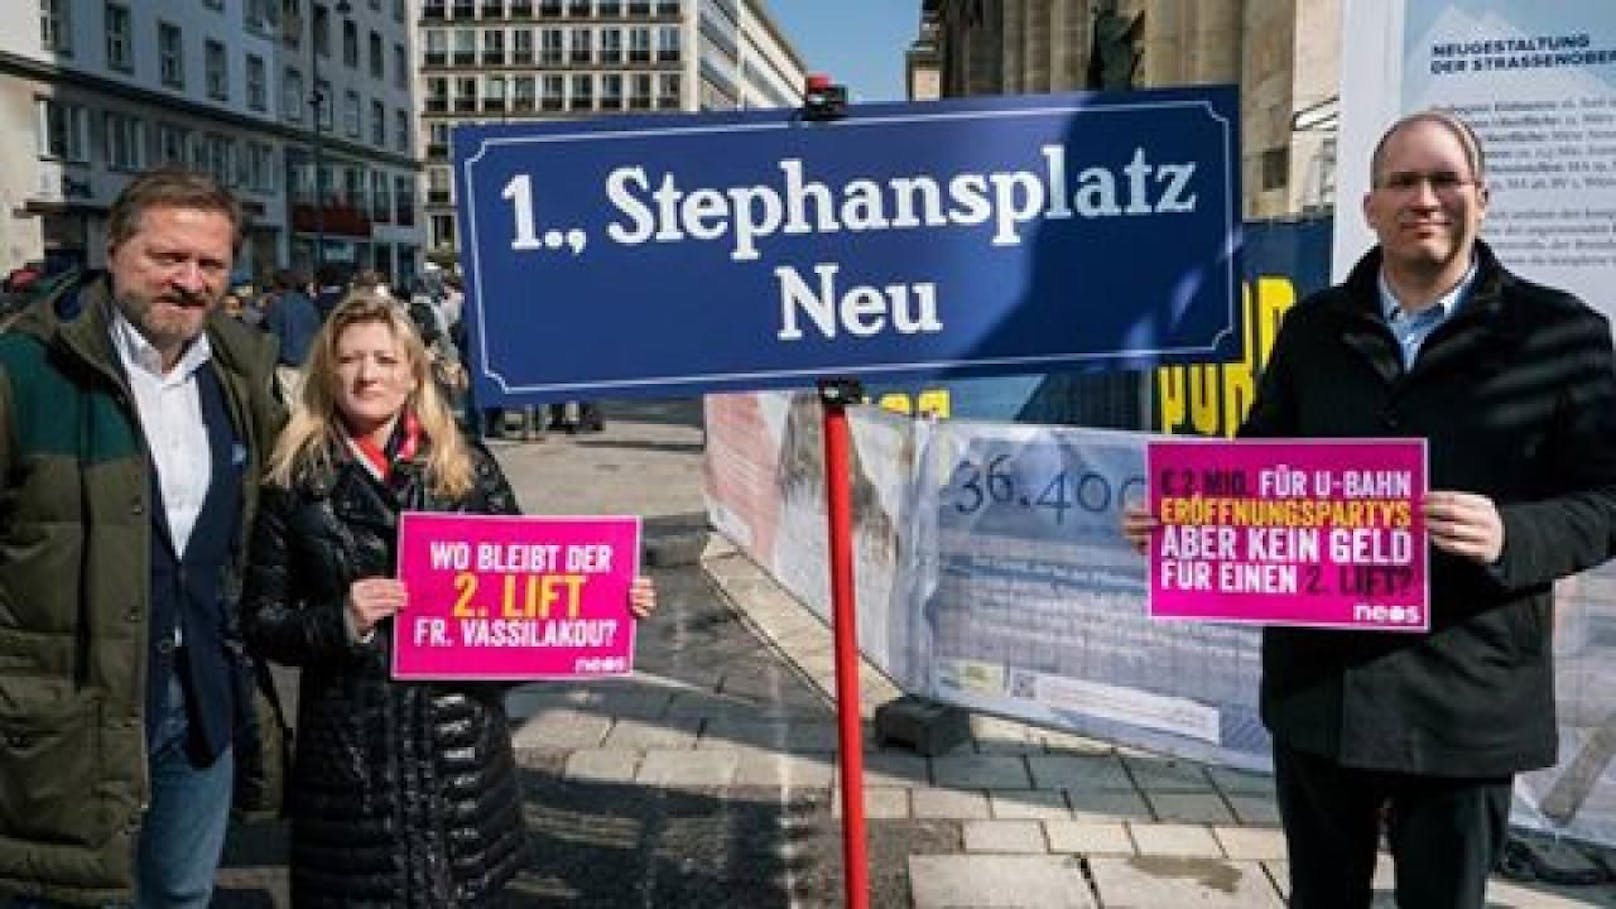 Stephansplatz: Verhindert Ensembleschutz 2. Lift?